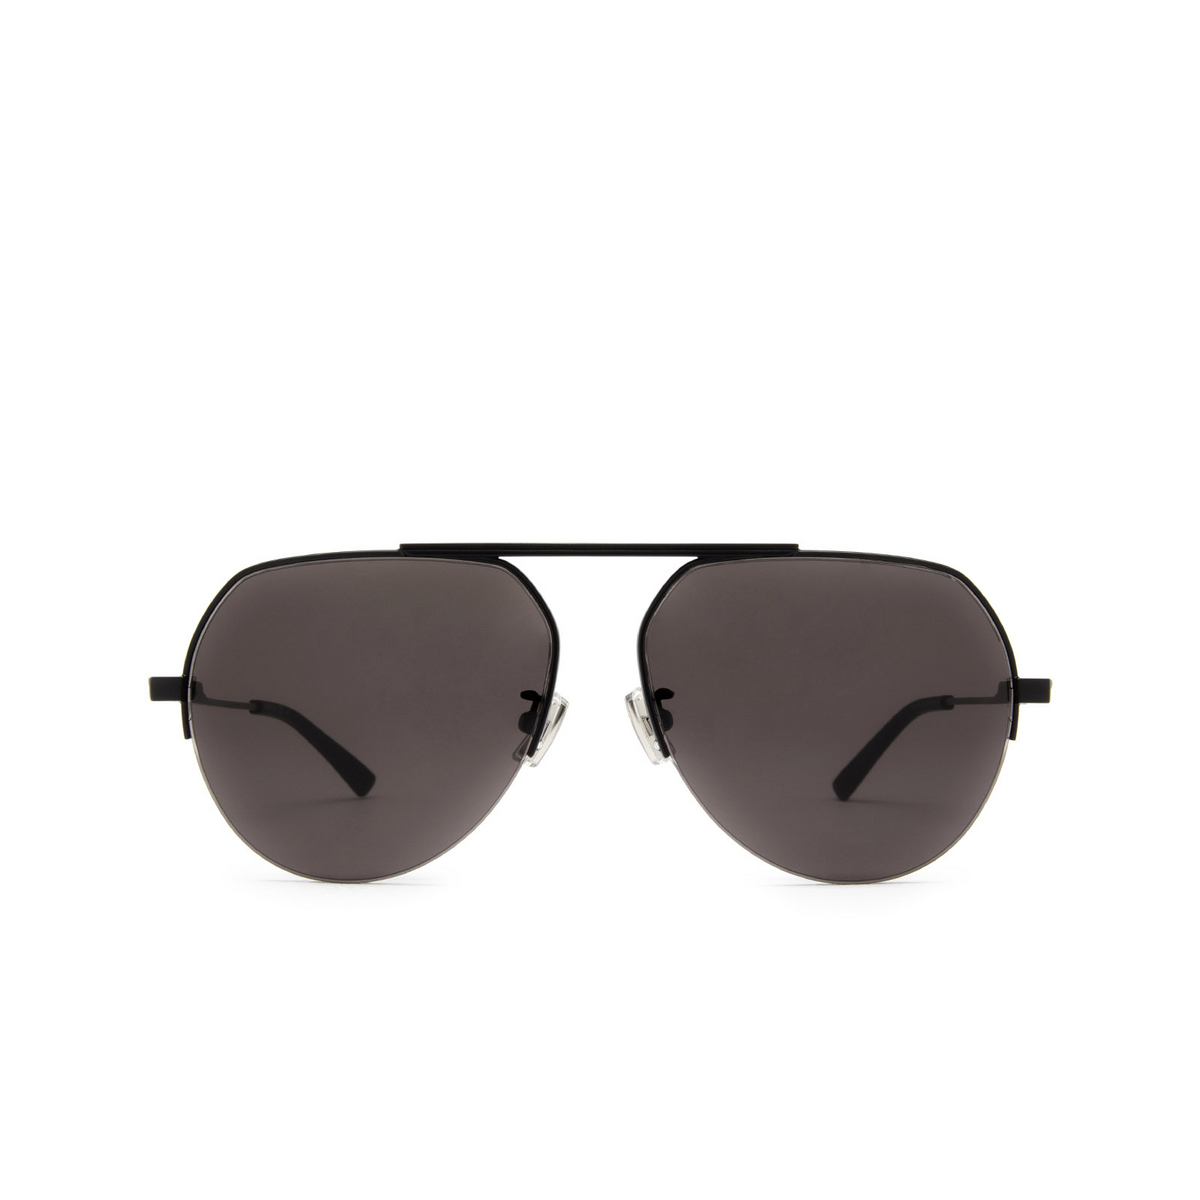 Bottega Veneta® Aviator Sunglasses: BV1150S color Black 005 - front view.